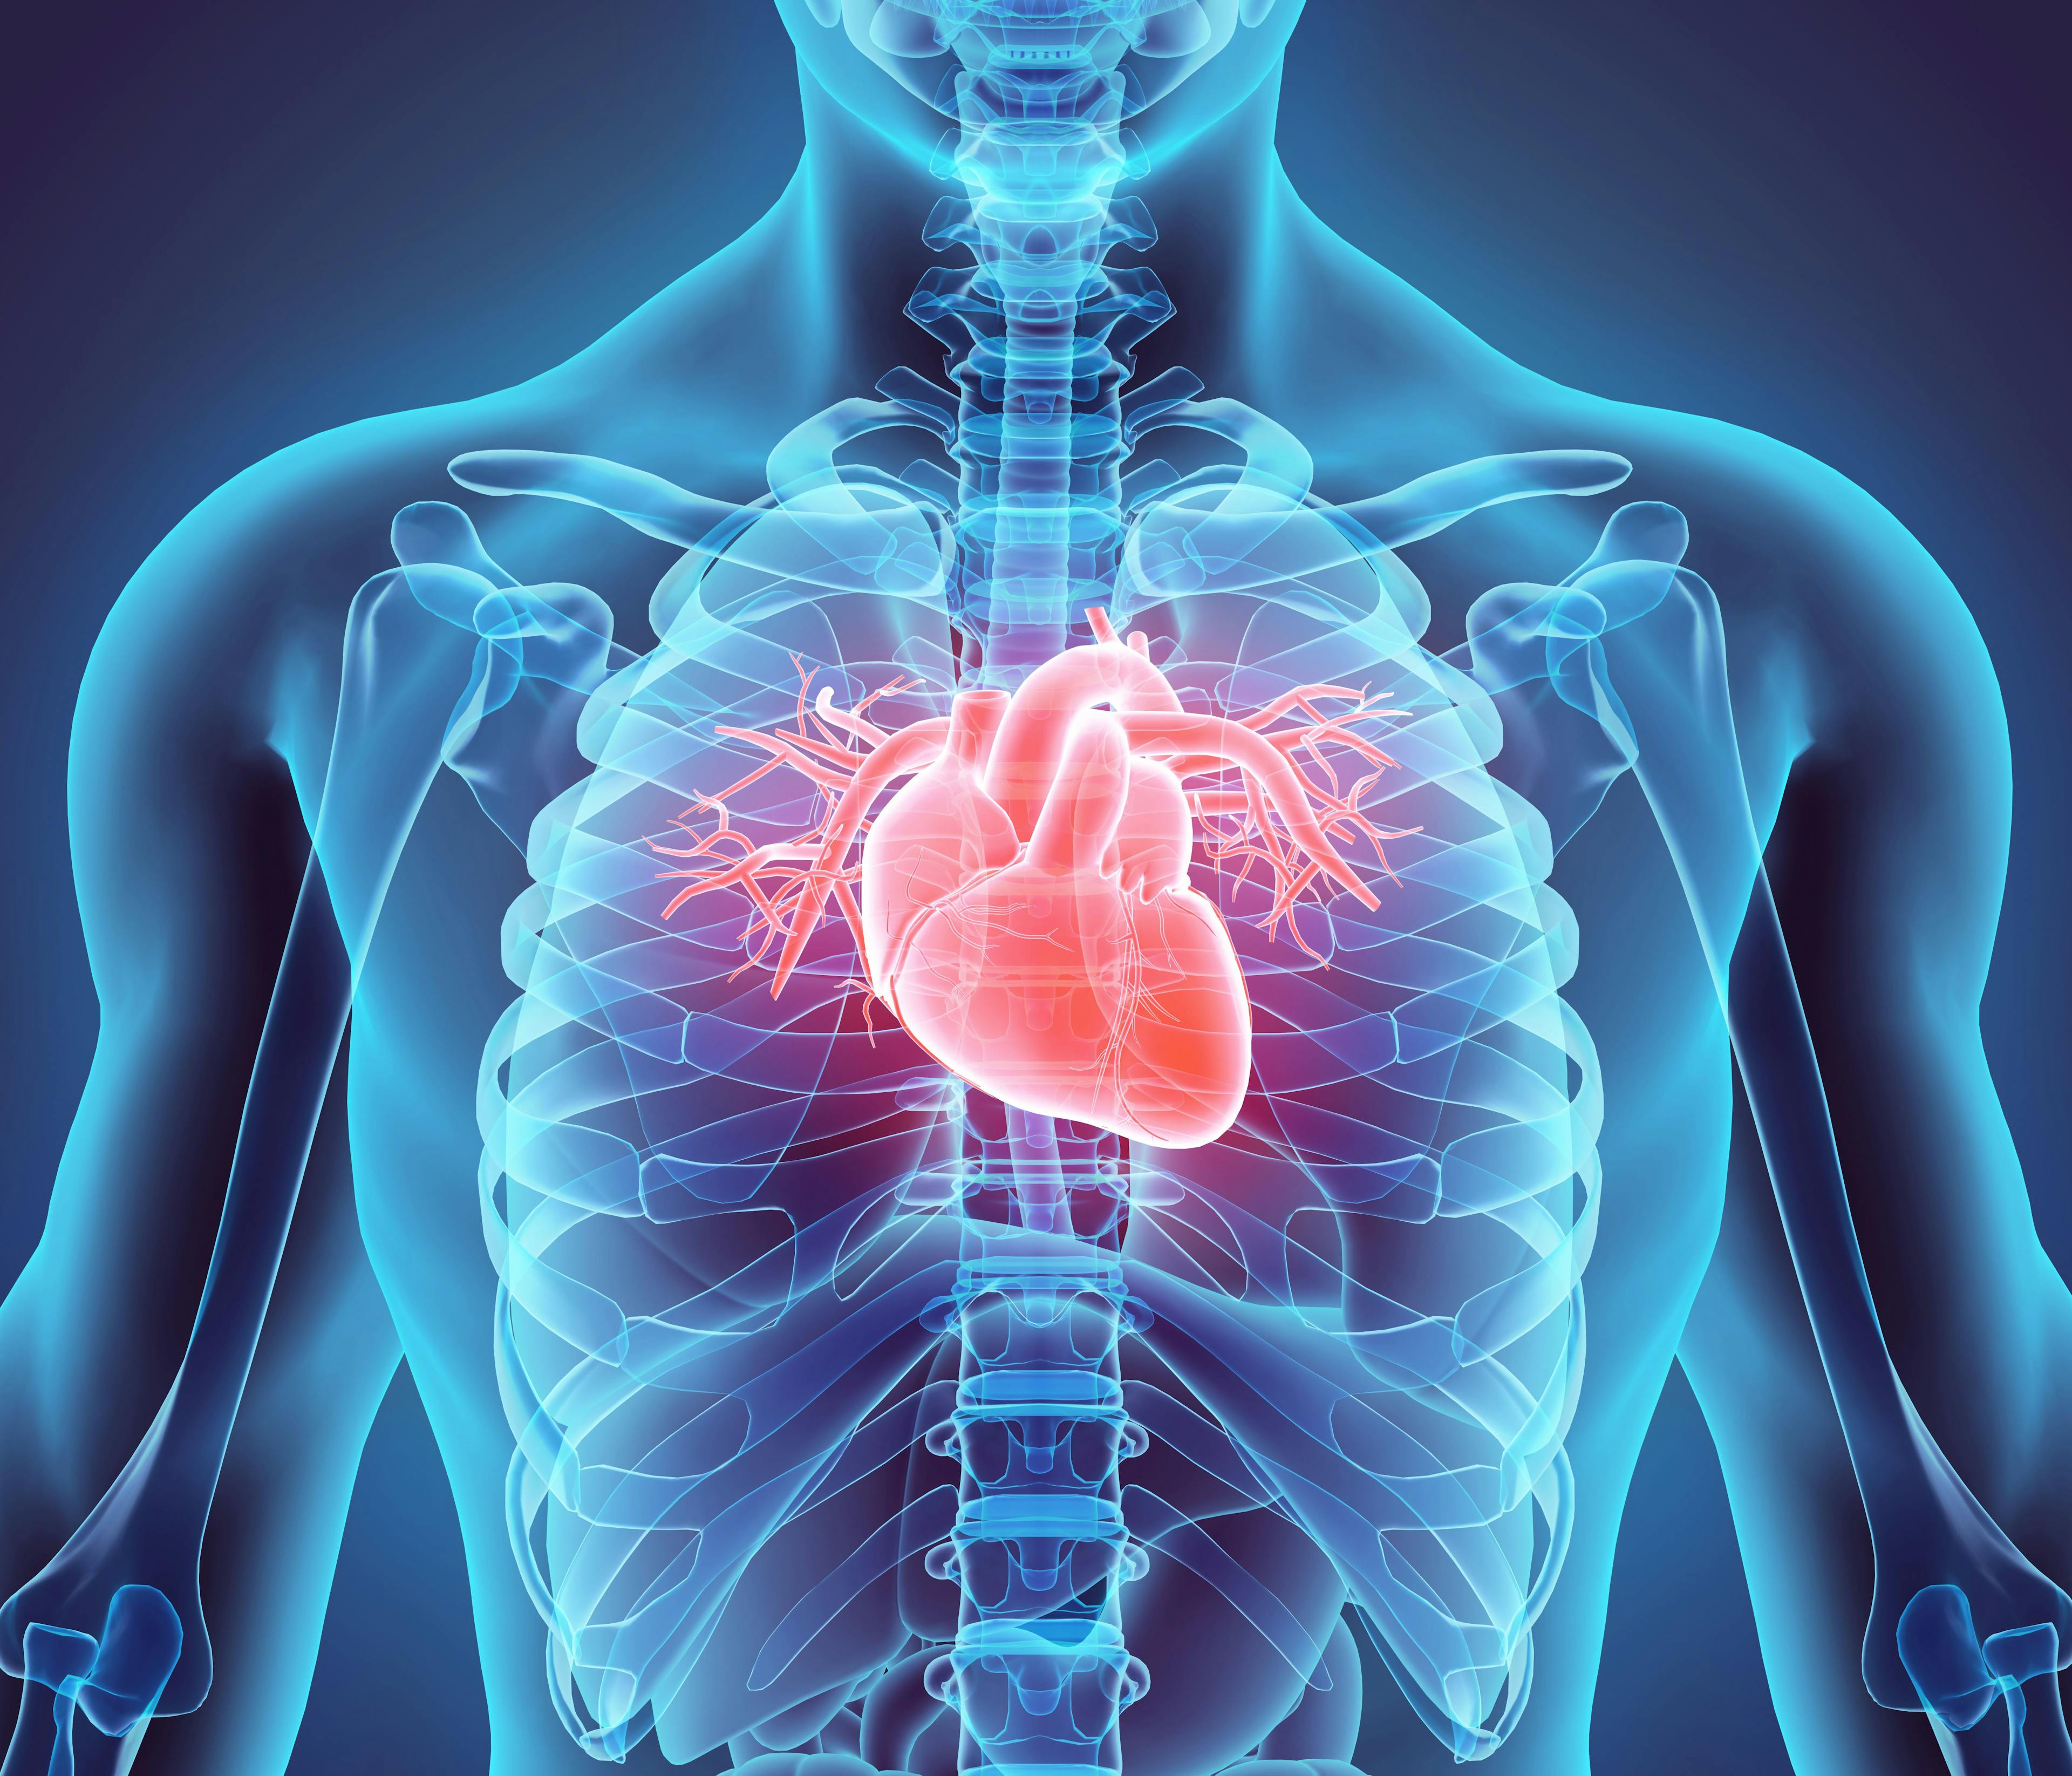 3D illustration of Heart, medical concept | Image Credit: yodiyim -stock.adobe.com